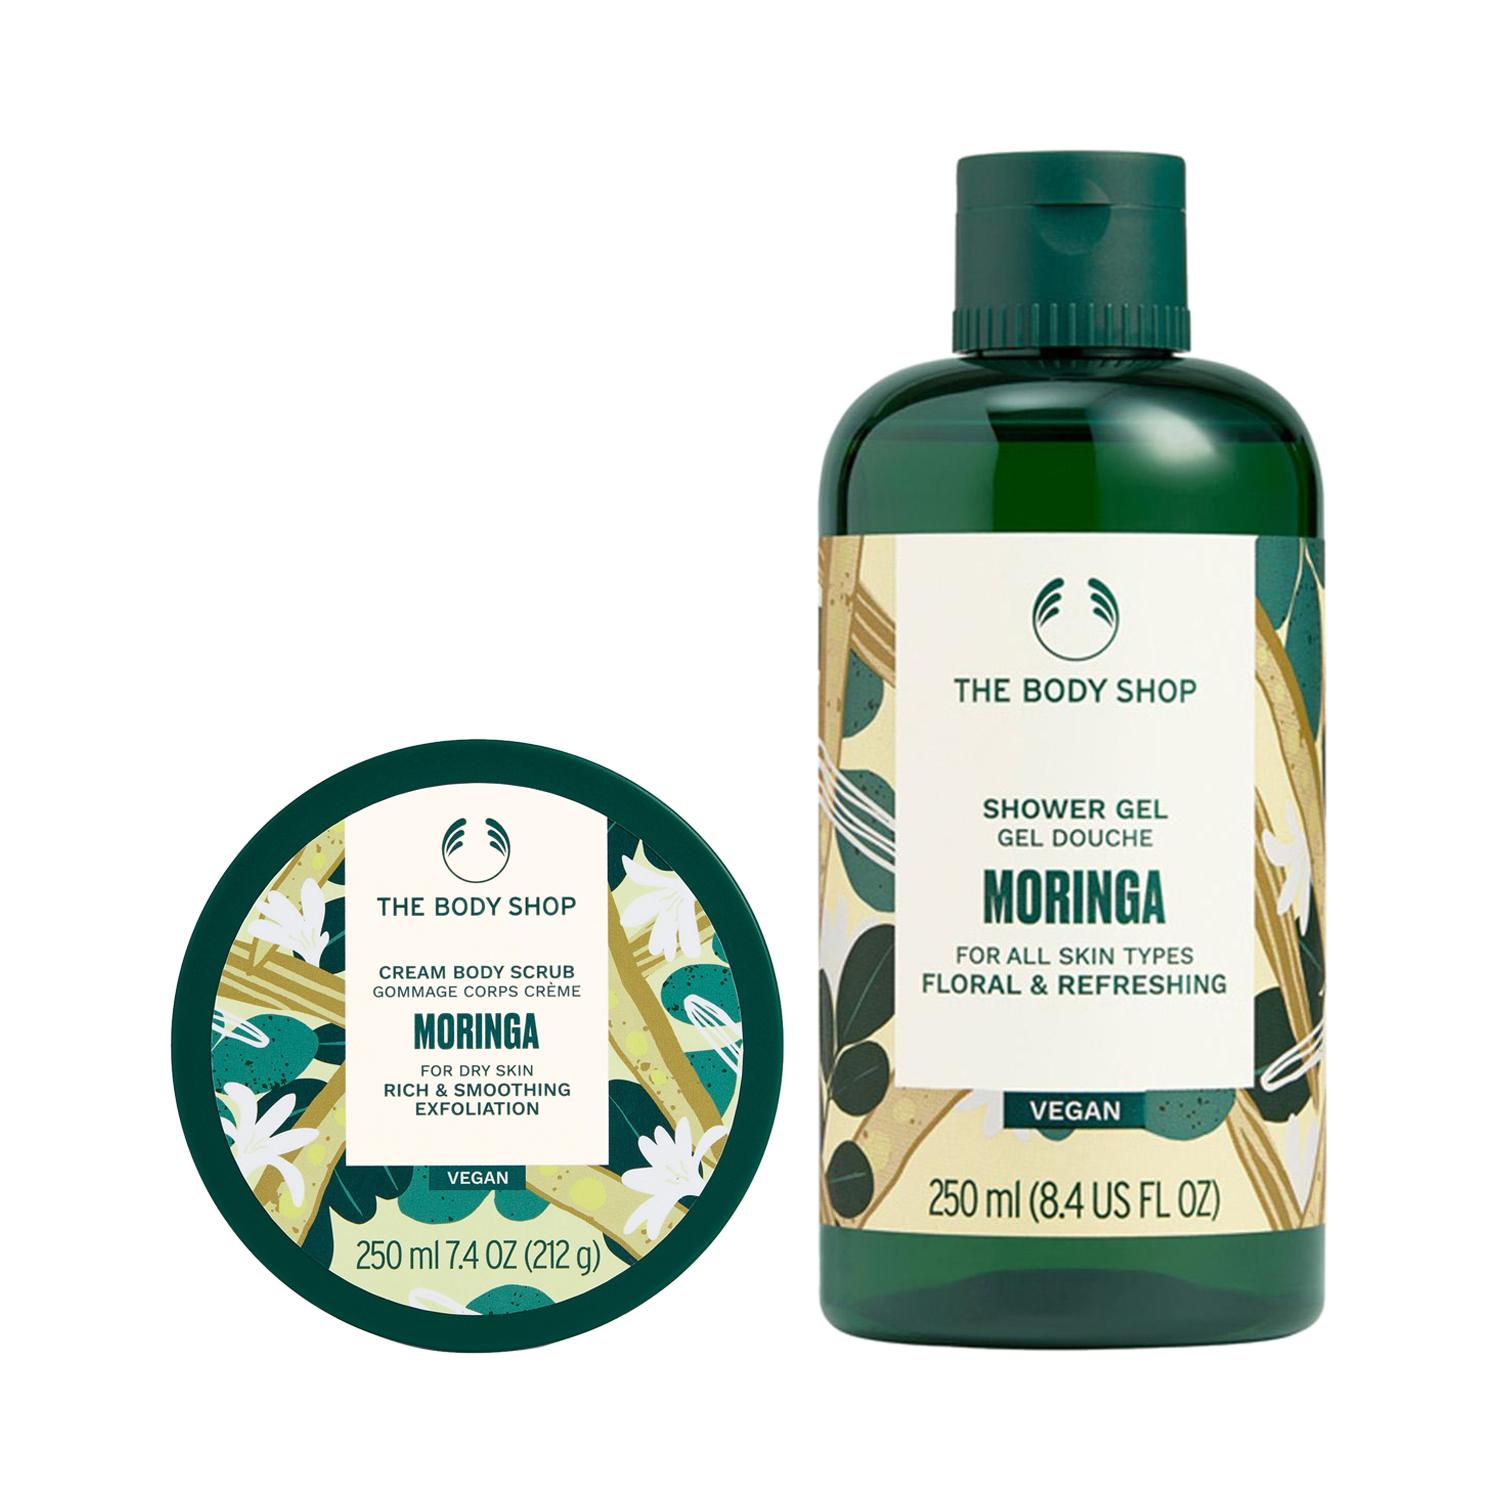 The Body Shop | The Body Shop Moringa Shower Gel & Body Scrub Combo